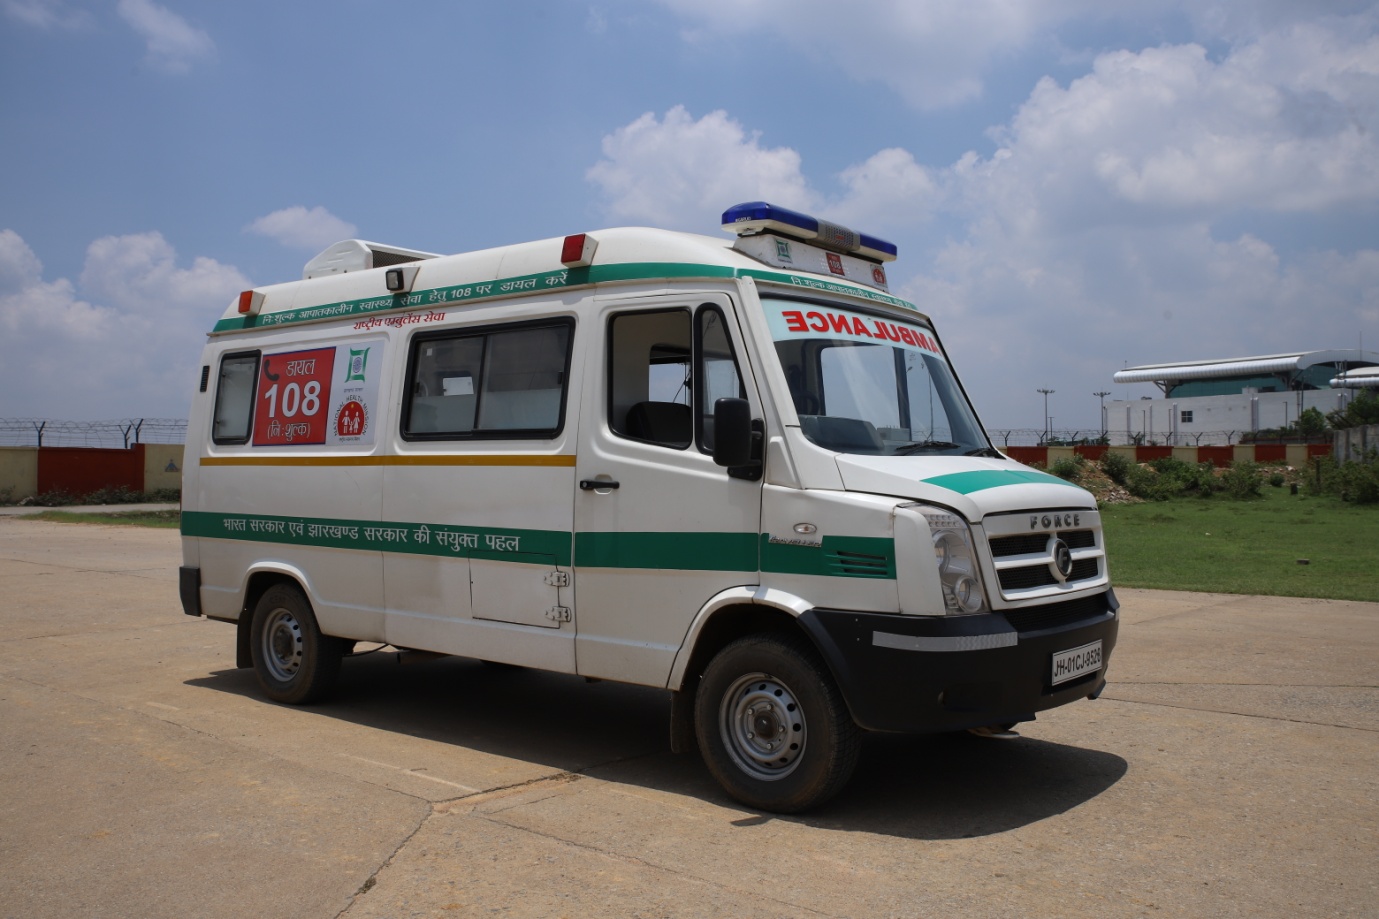 Medical Emergency Numbers in India